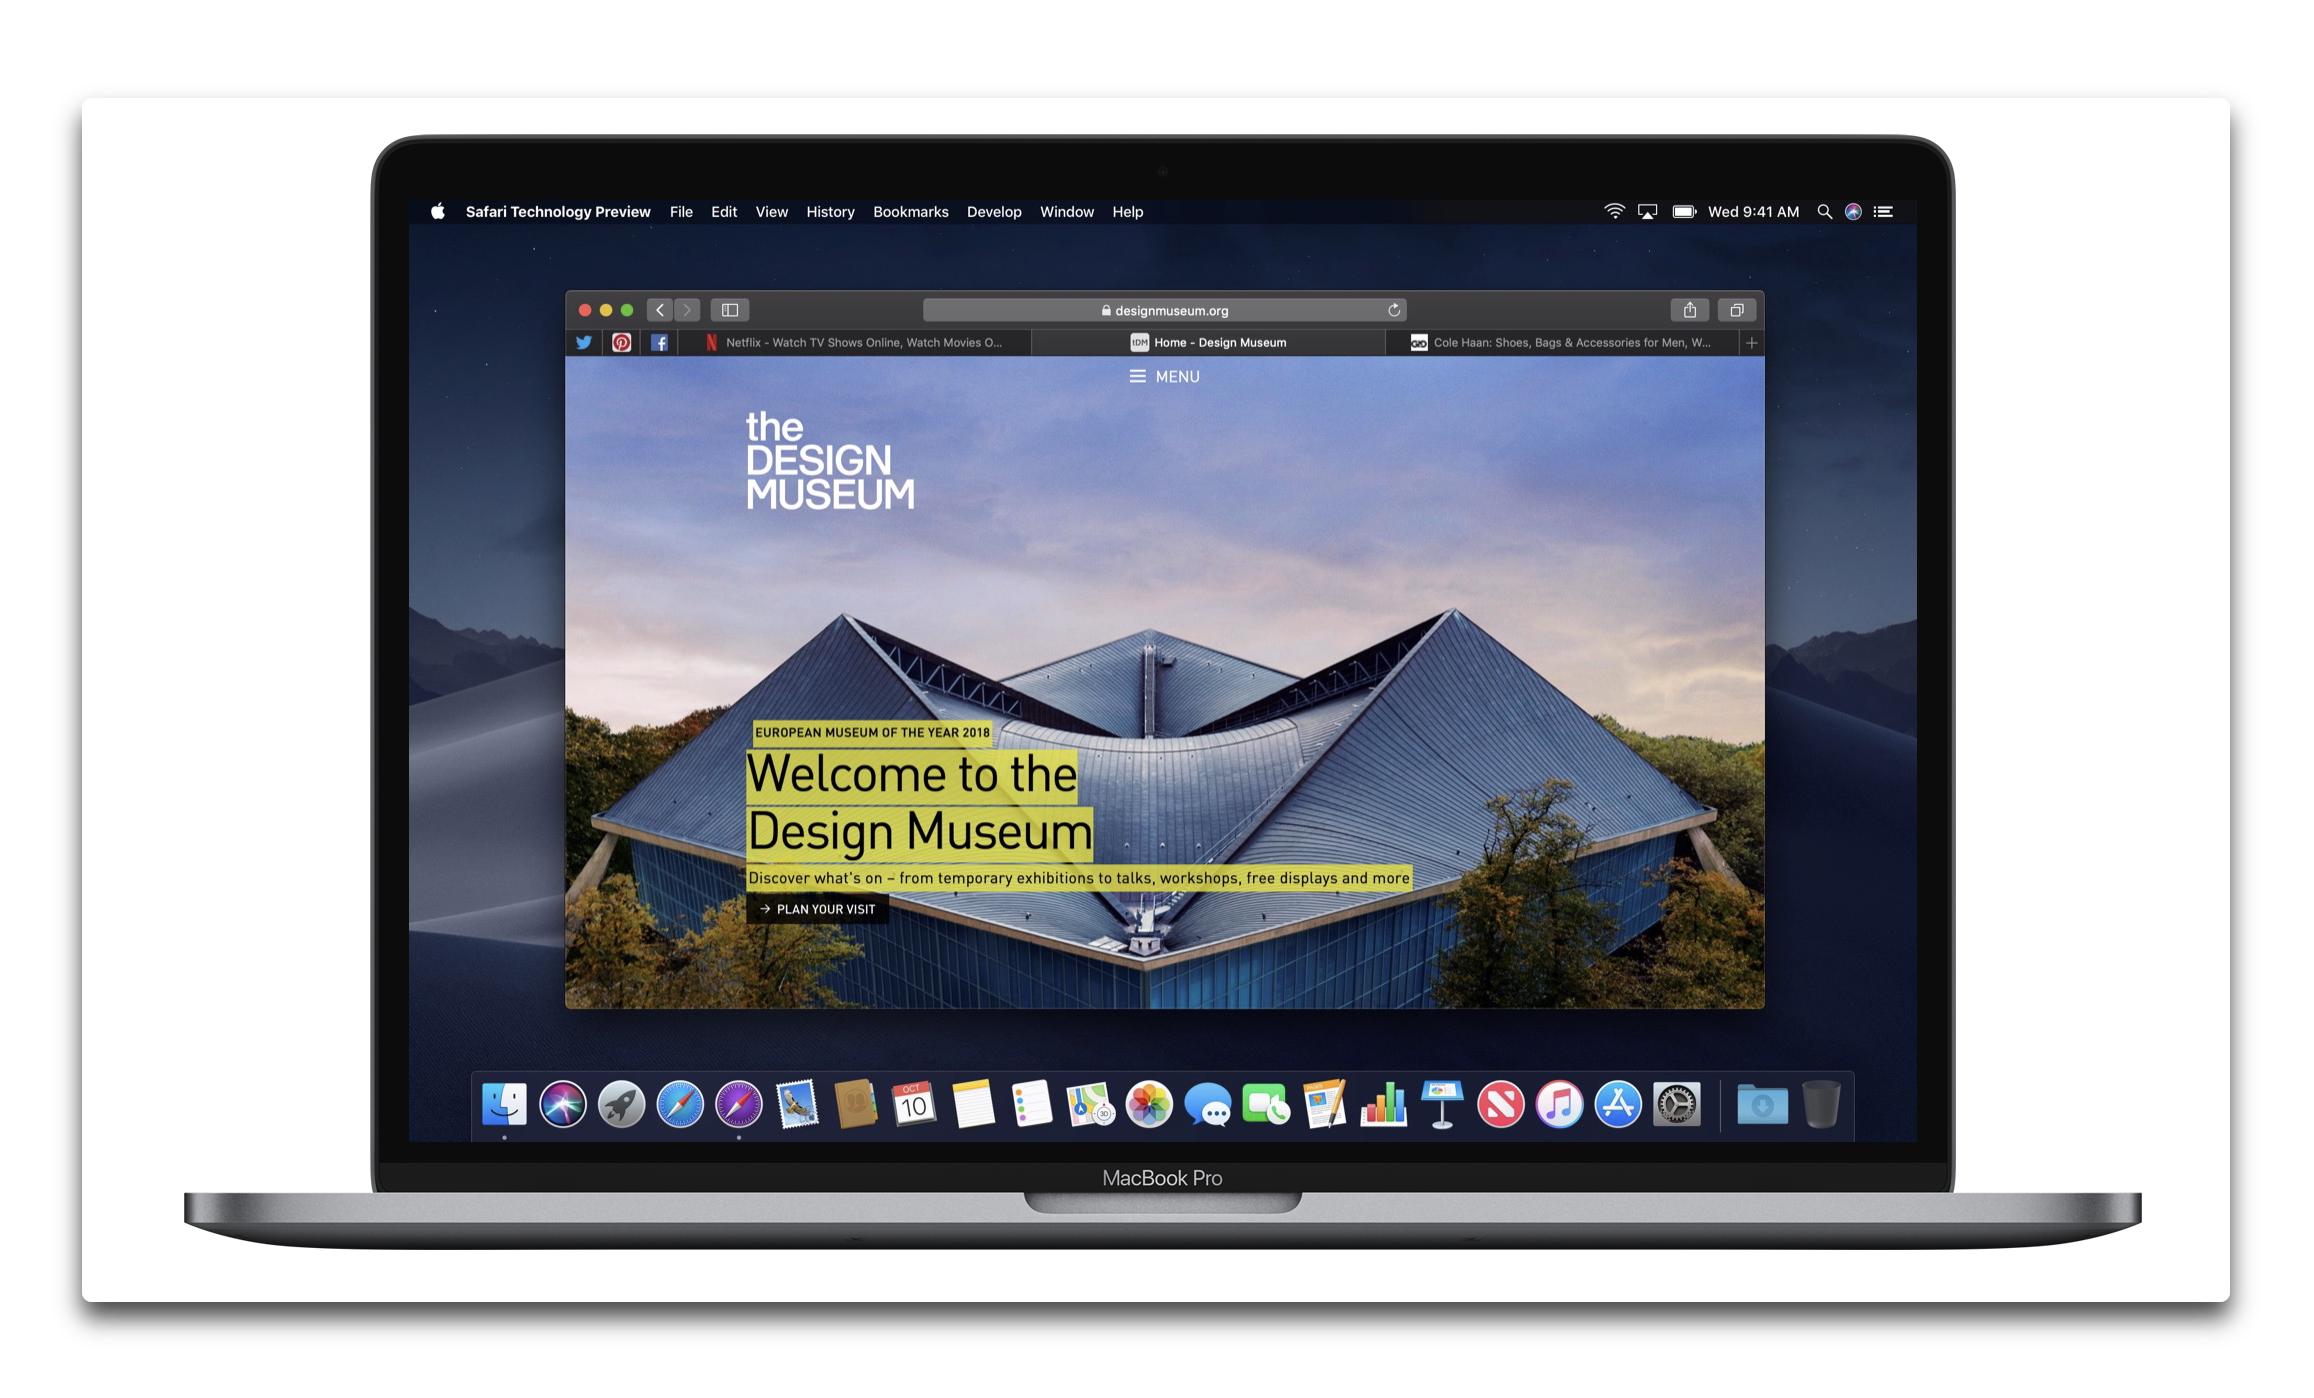 【Mac】Apple，「Safari Technology Preview Release 79」を開発者にリリース